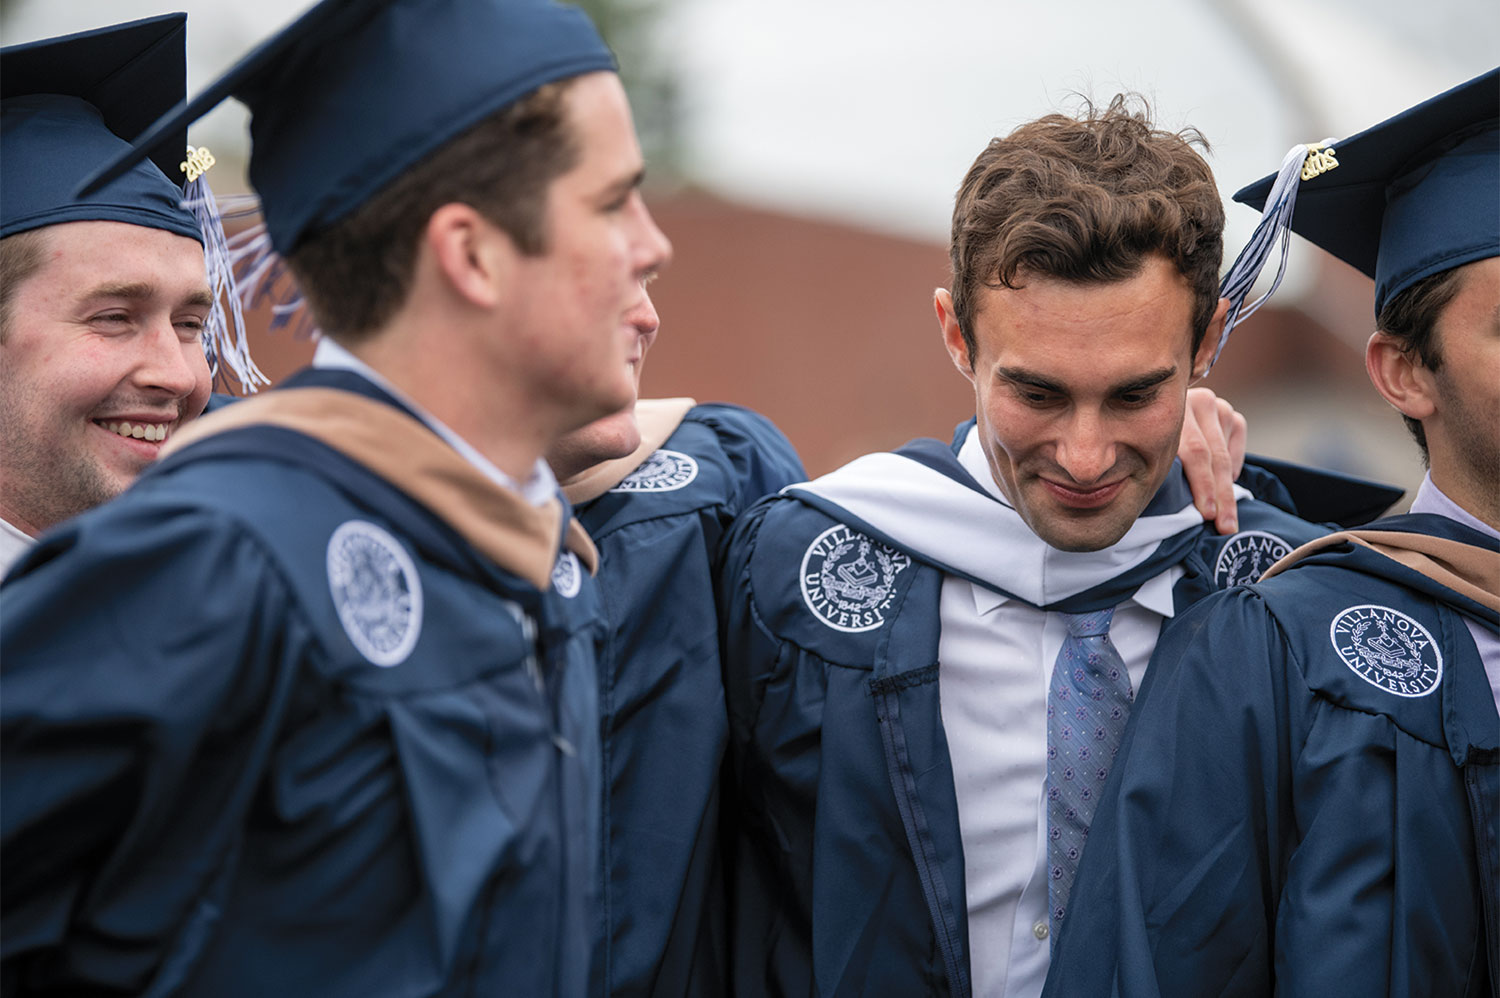 Male Villanova students wearing graduation robes and celebrating.